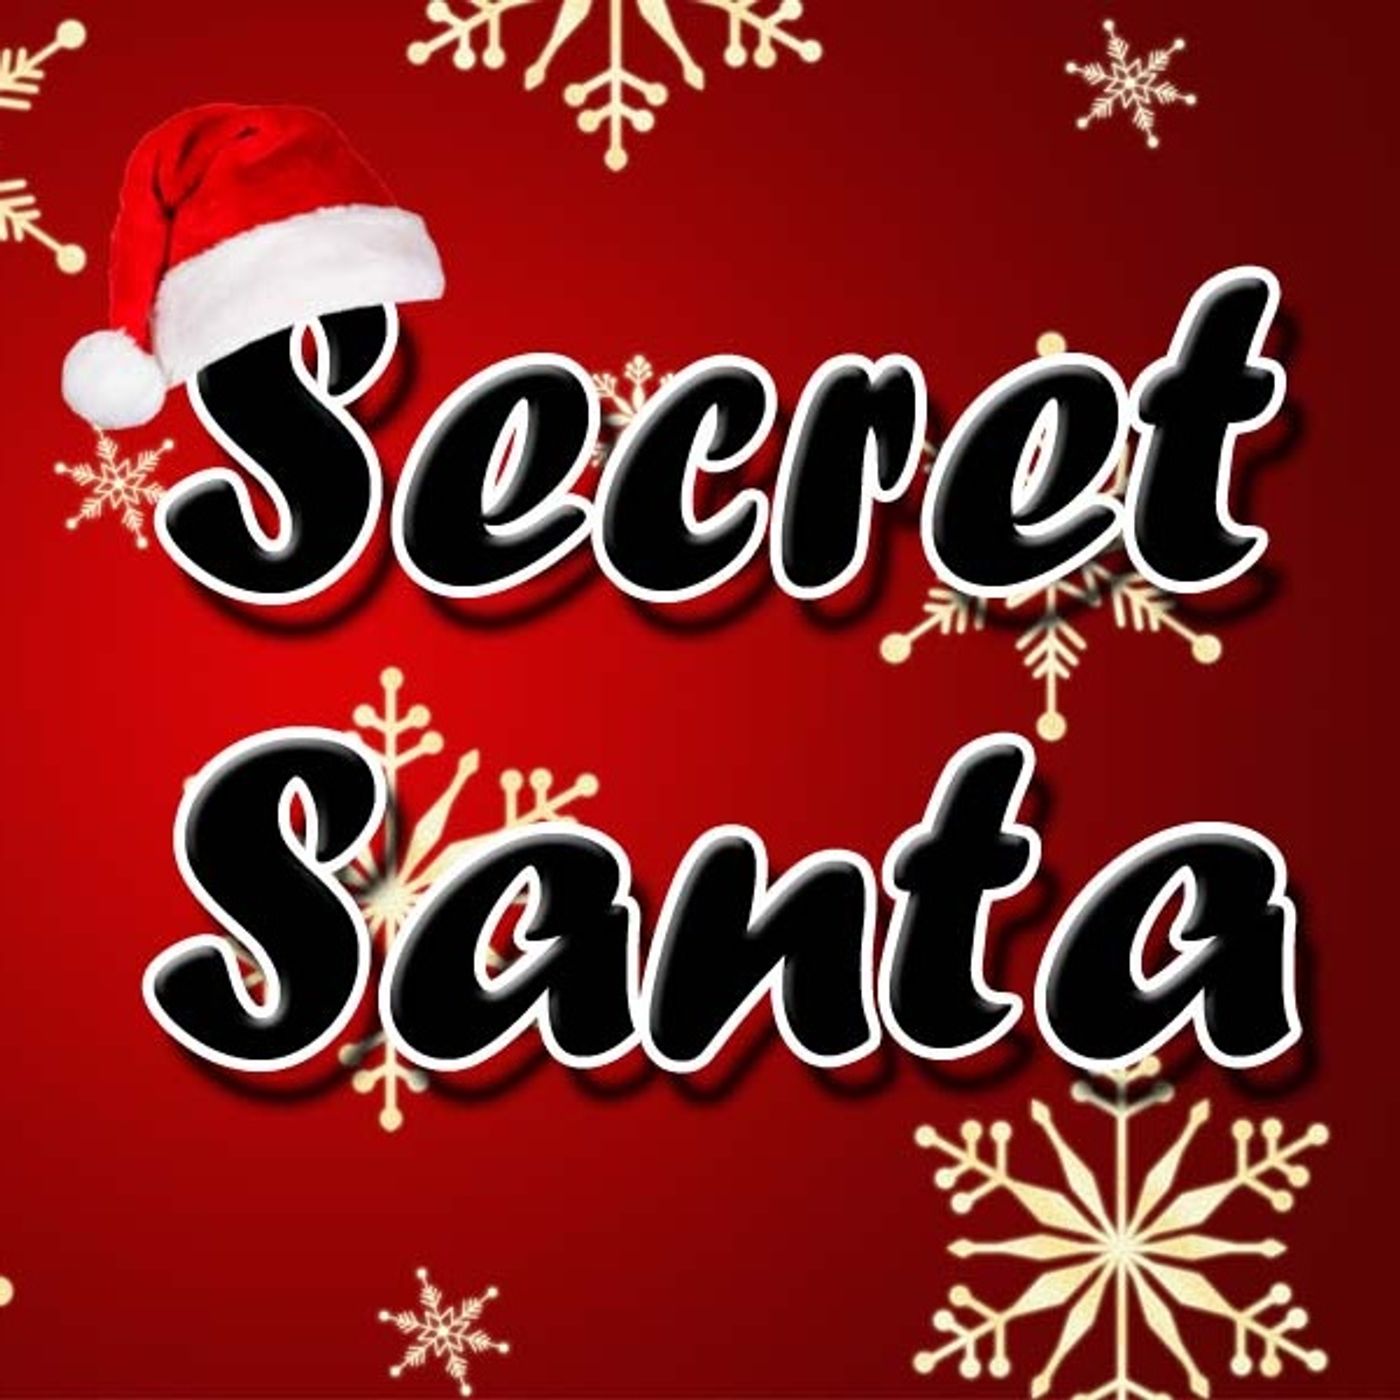 Santa’s Secret